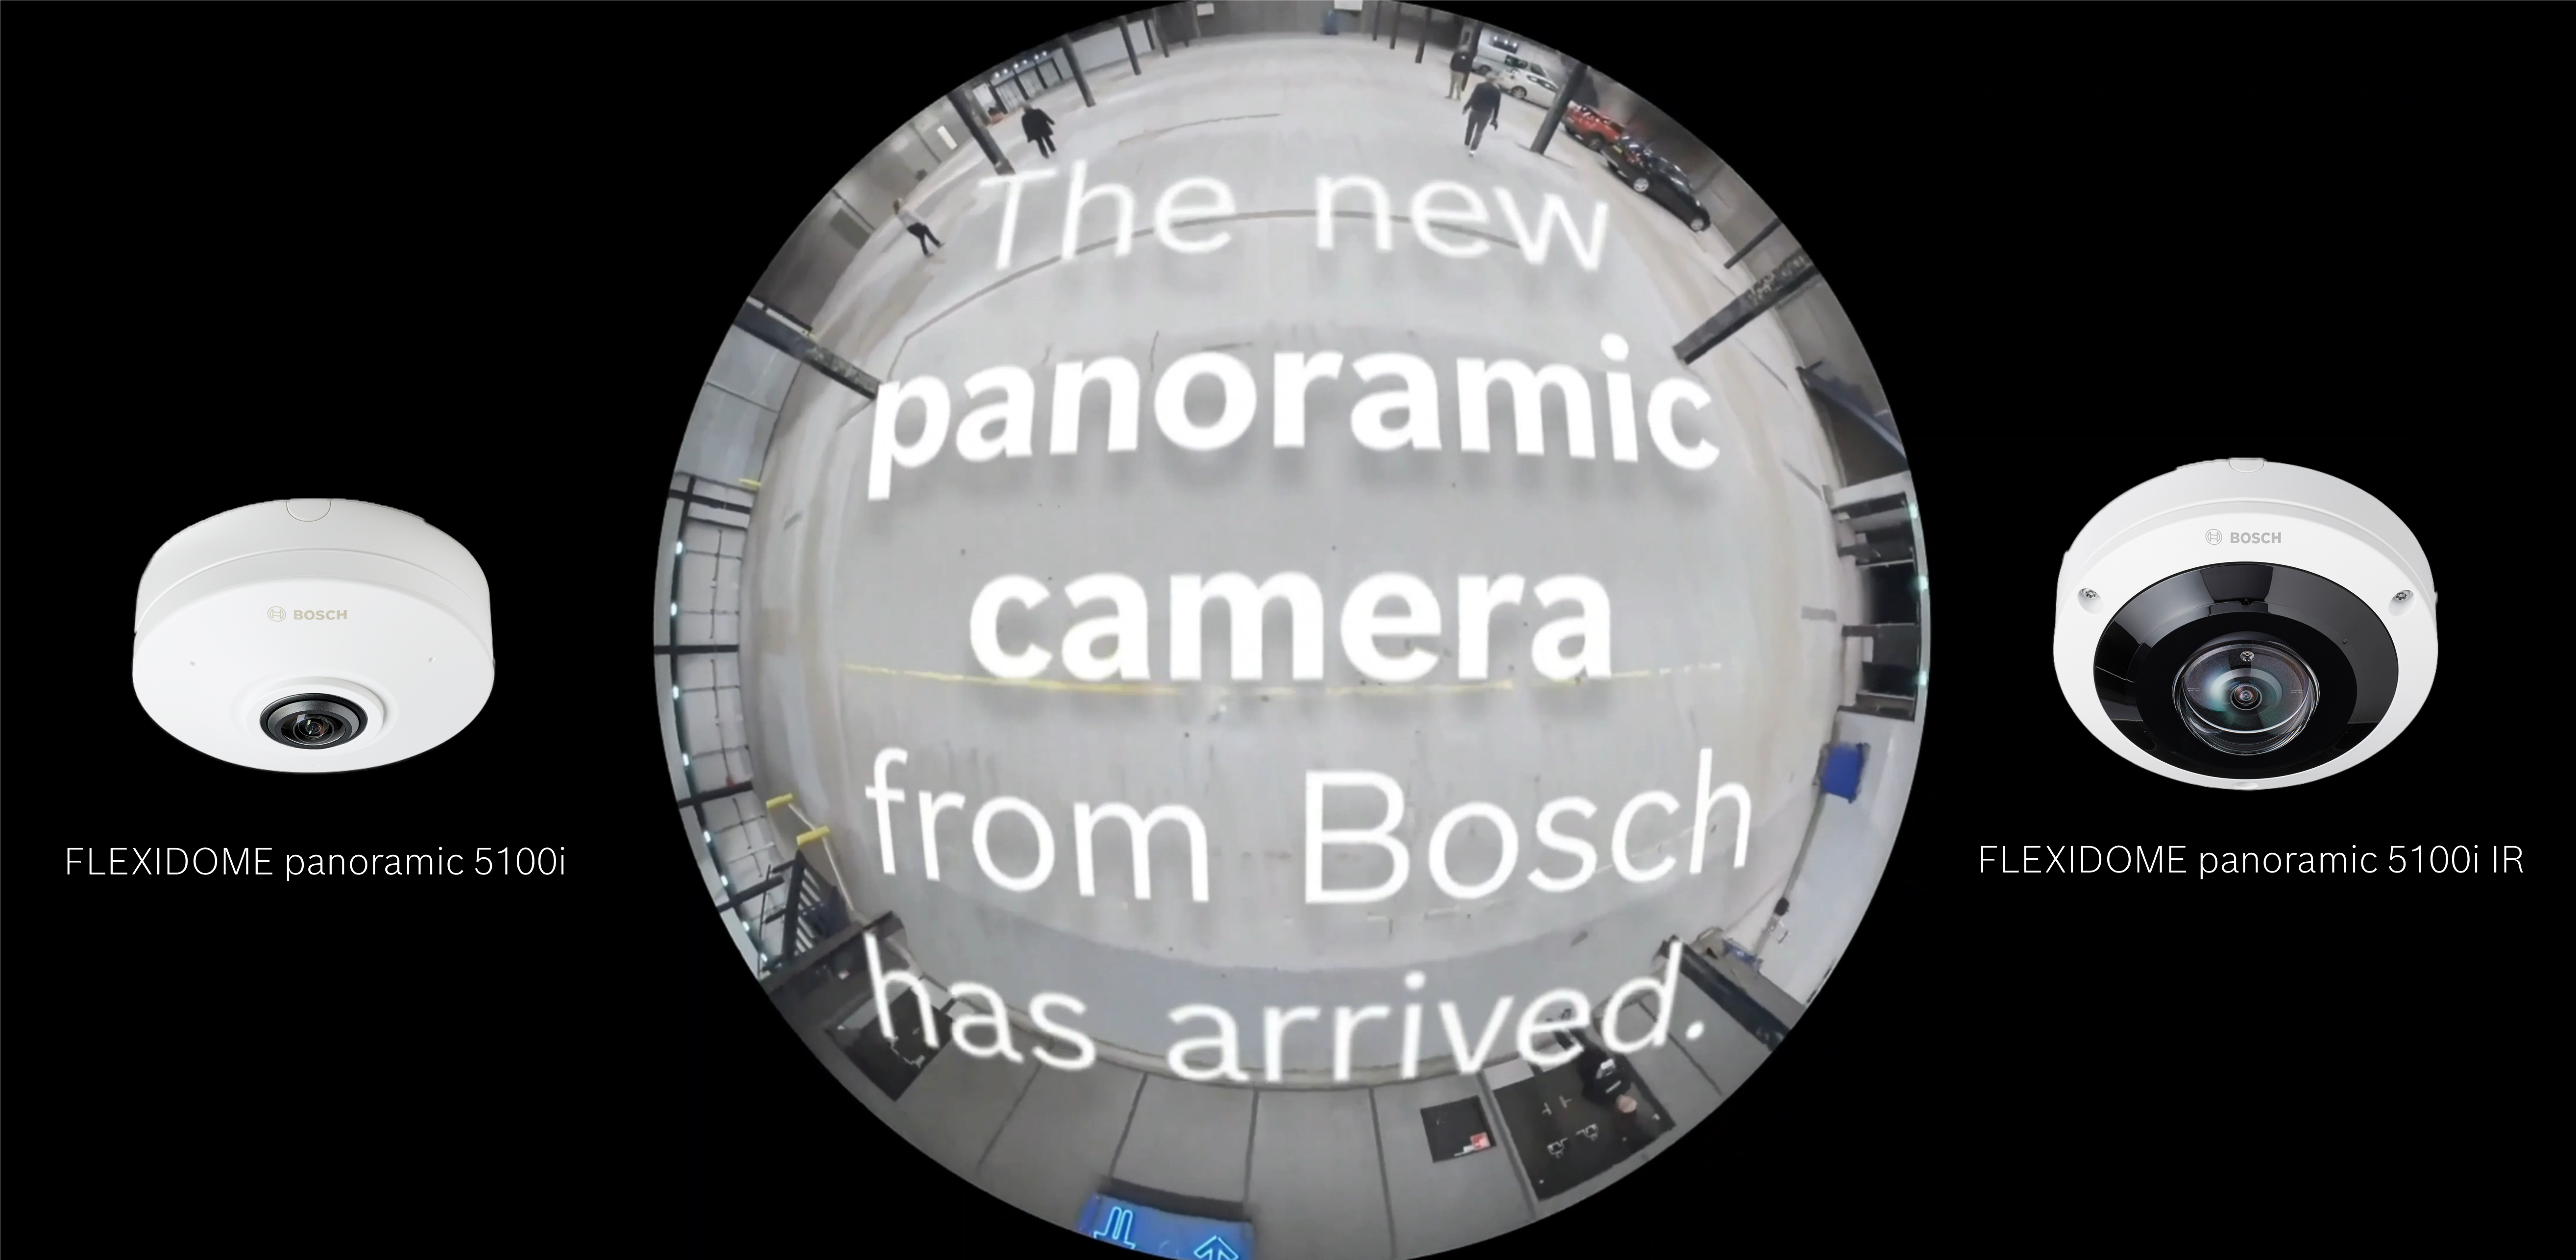 Bosch FLEXIDOME panoramic 5100i (IR) Has Arrived Image